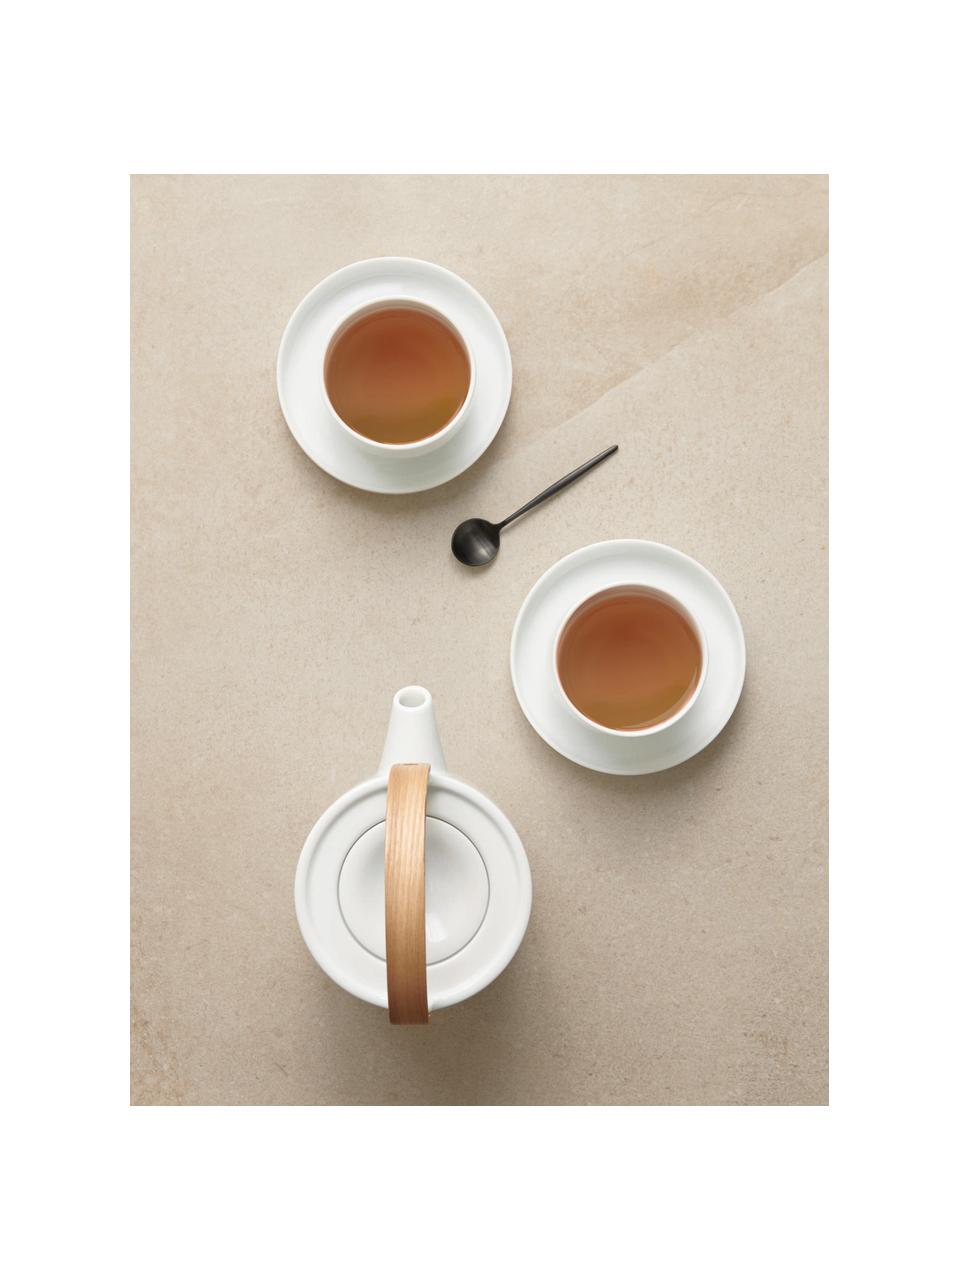 Porzellan-Teekanne Coppa sencha mit Holzgriff, 1 L, Kanne: Porzellan, Griff: Holz, Weiß, Beige, 1 L